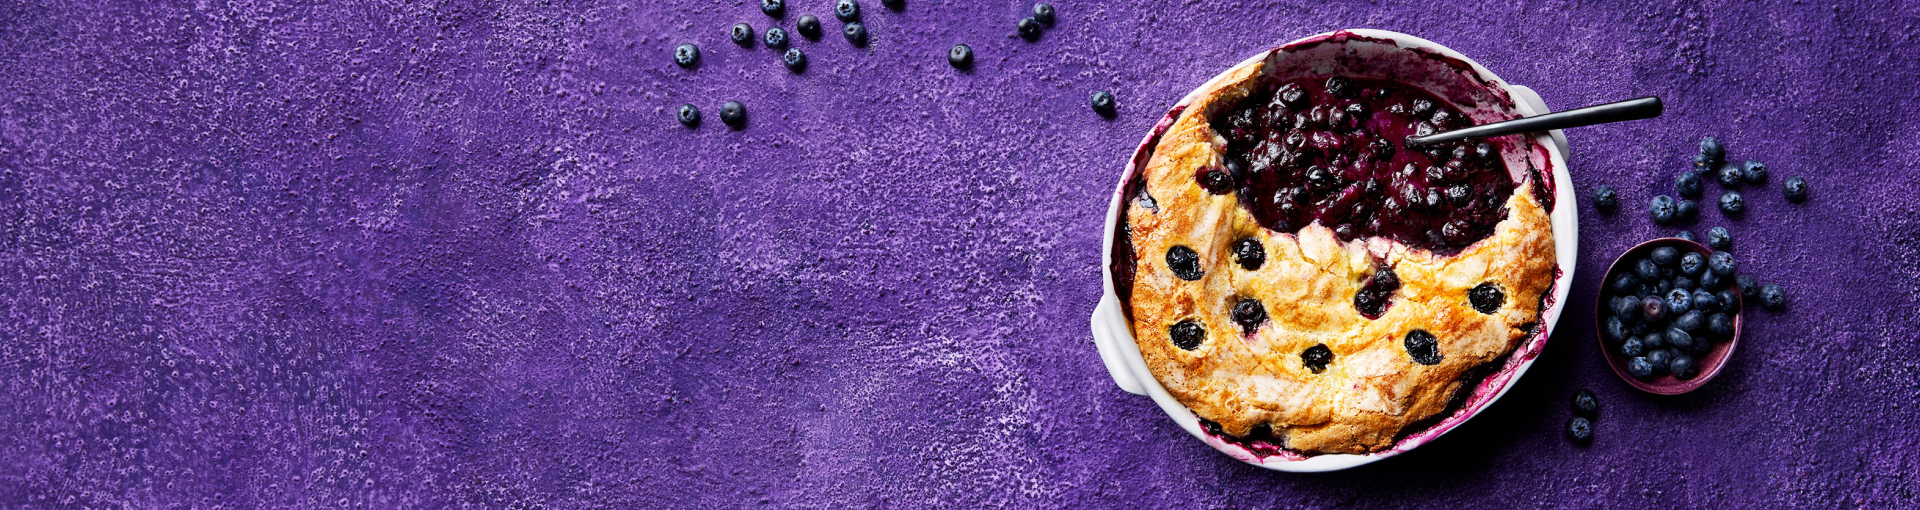 Gluten-free Blueberry Pudding